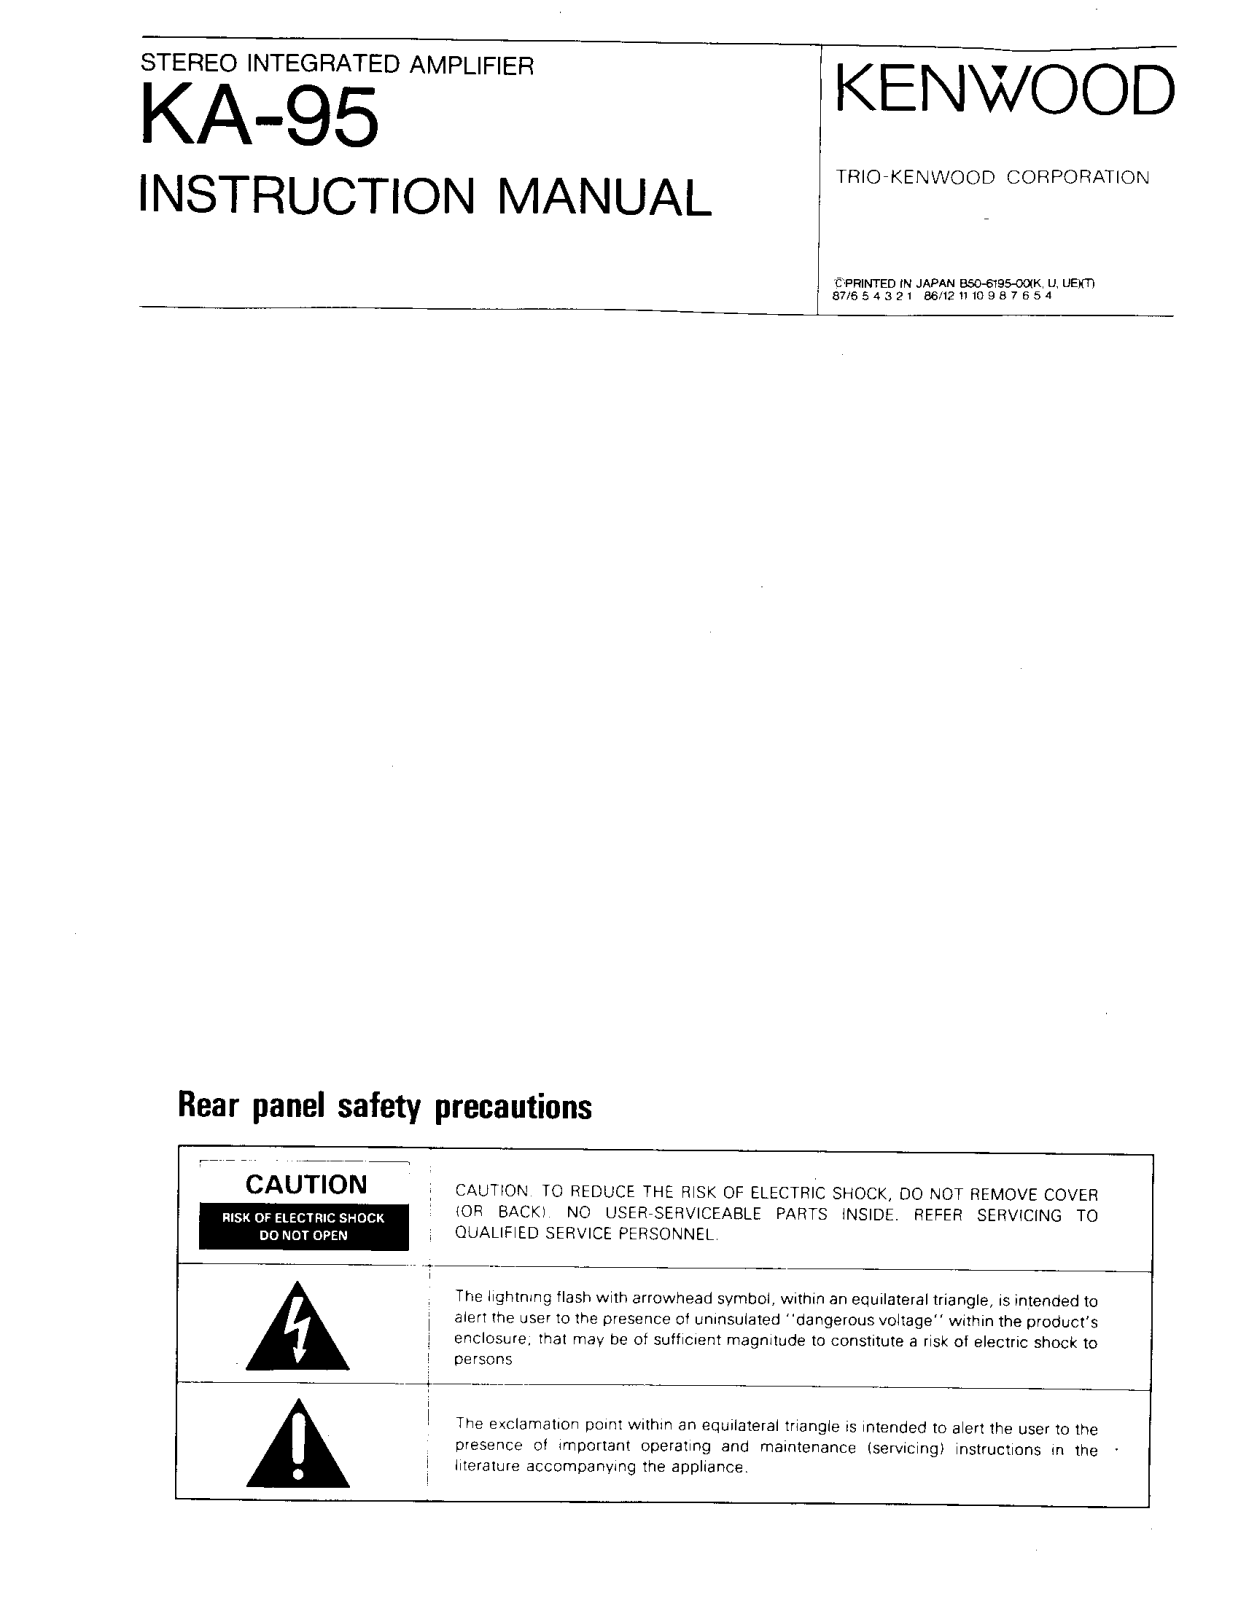 Kenwood KA-95 Owner's Manual